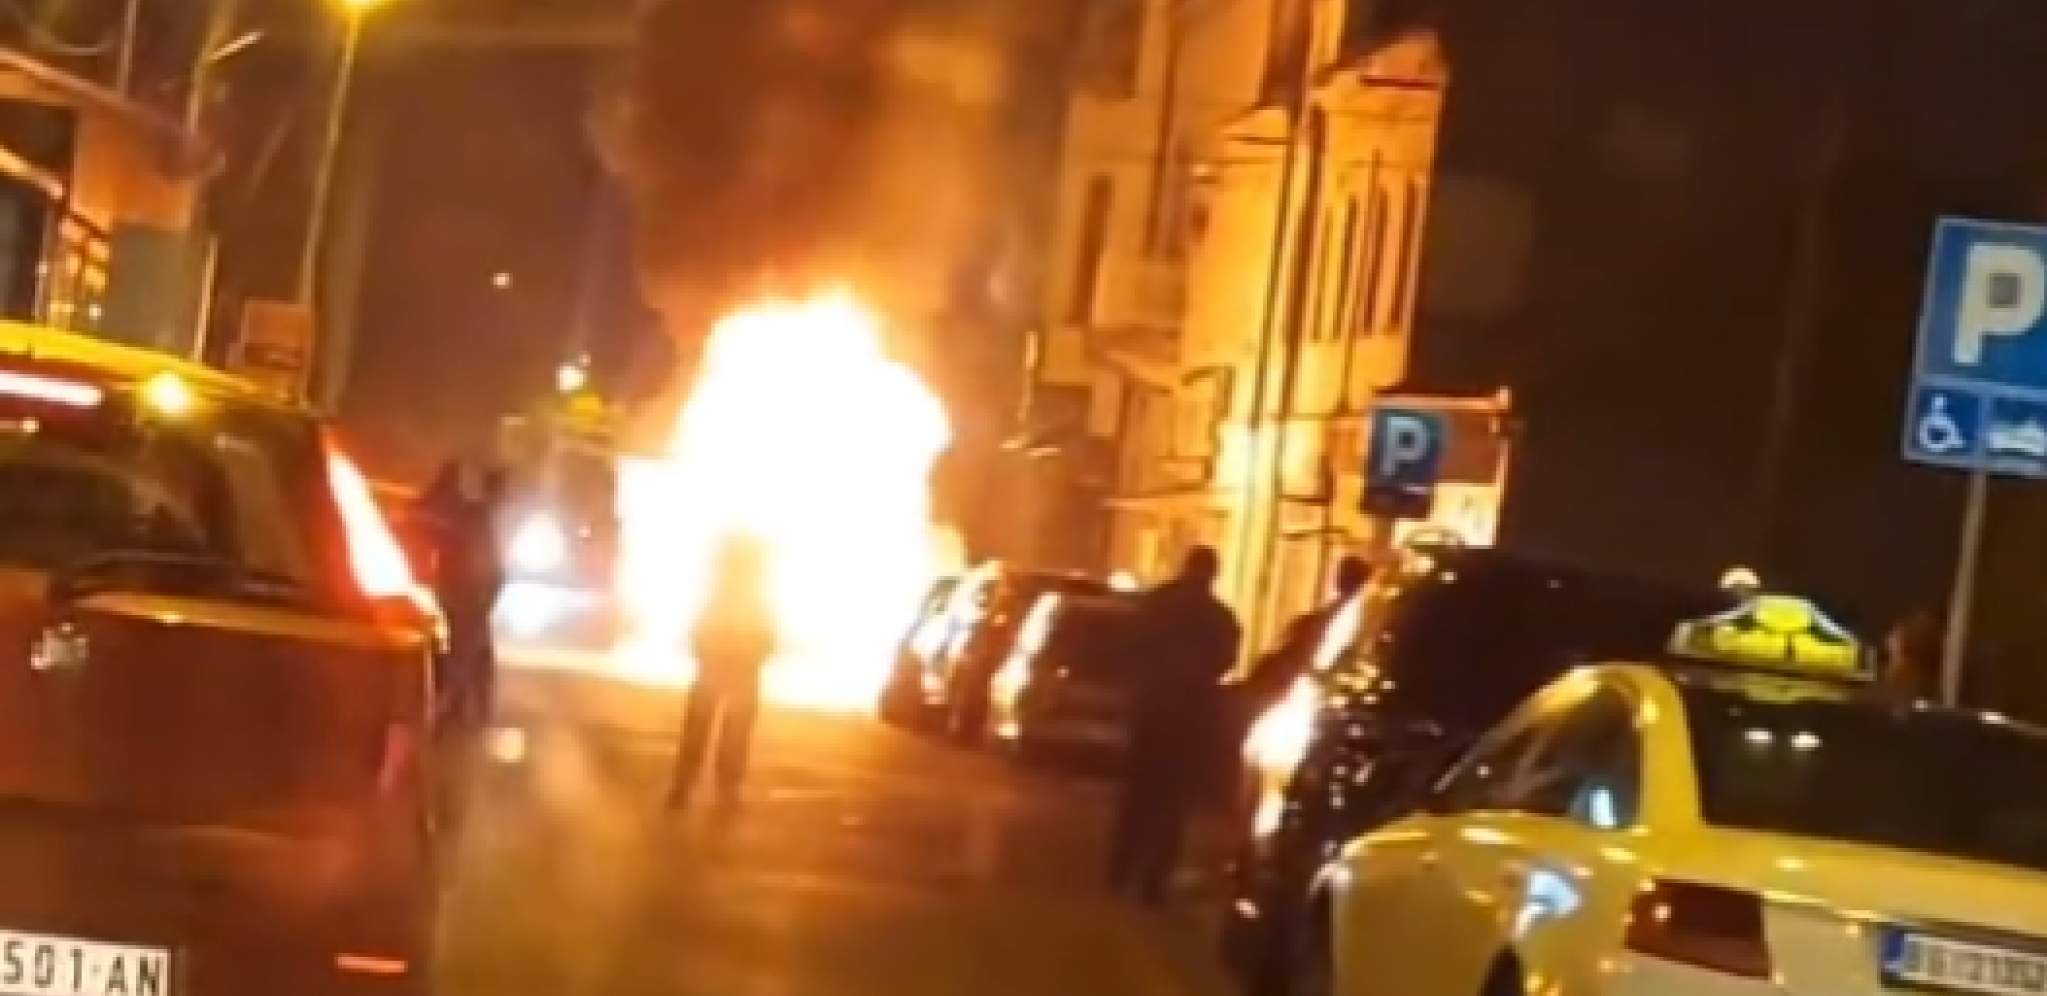 VATRA BUKTI, PROLAZNICI U ŠOKU Automobil se zapalio na Banovom brdu (VIDEO)